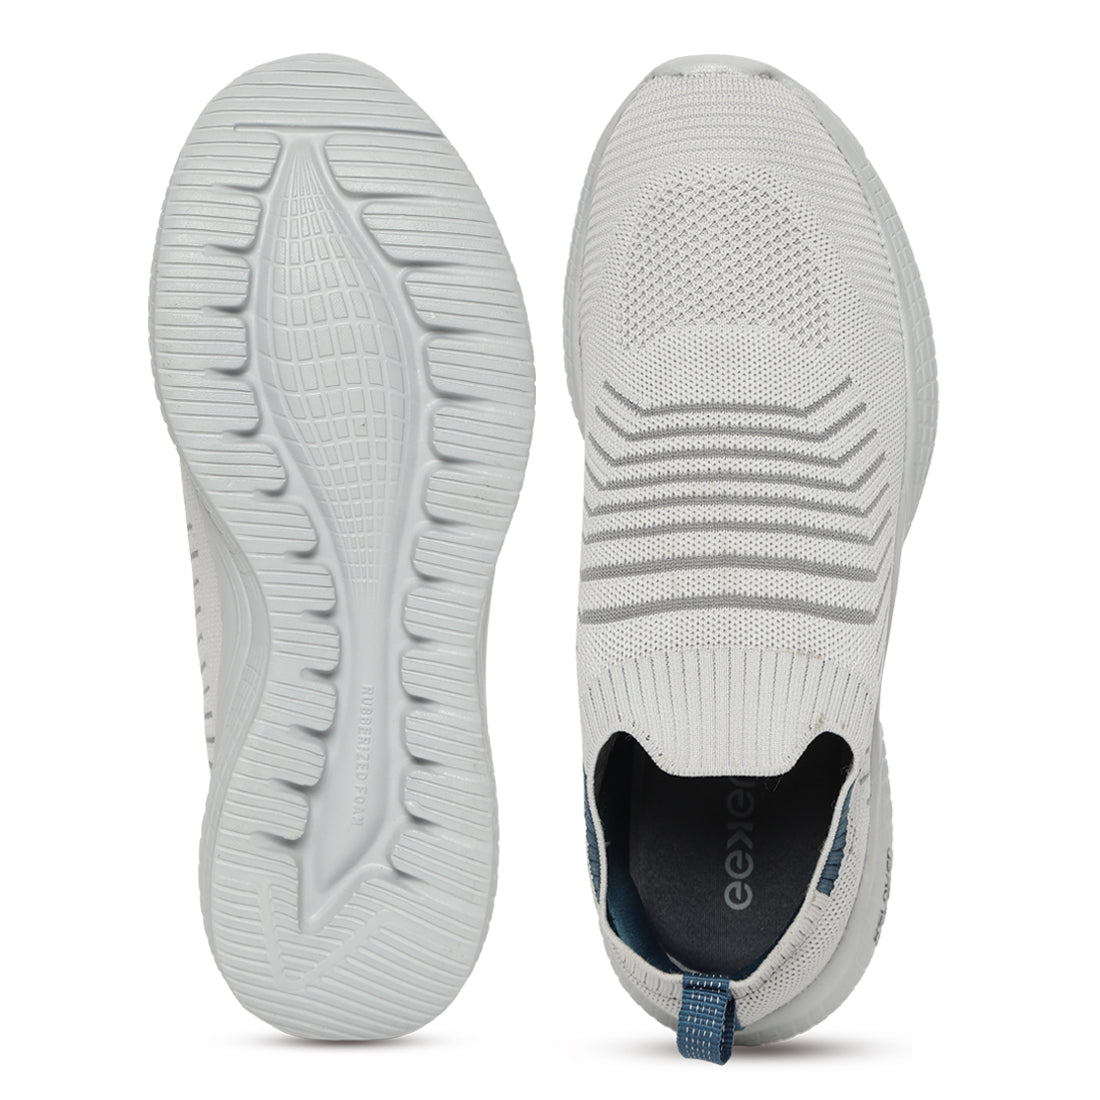 Eeken Light Grey - Teal Blue Athleisure Shoes for Men